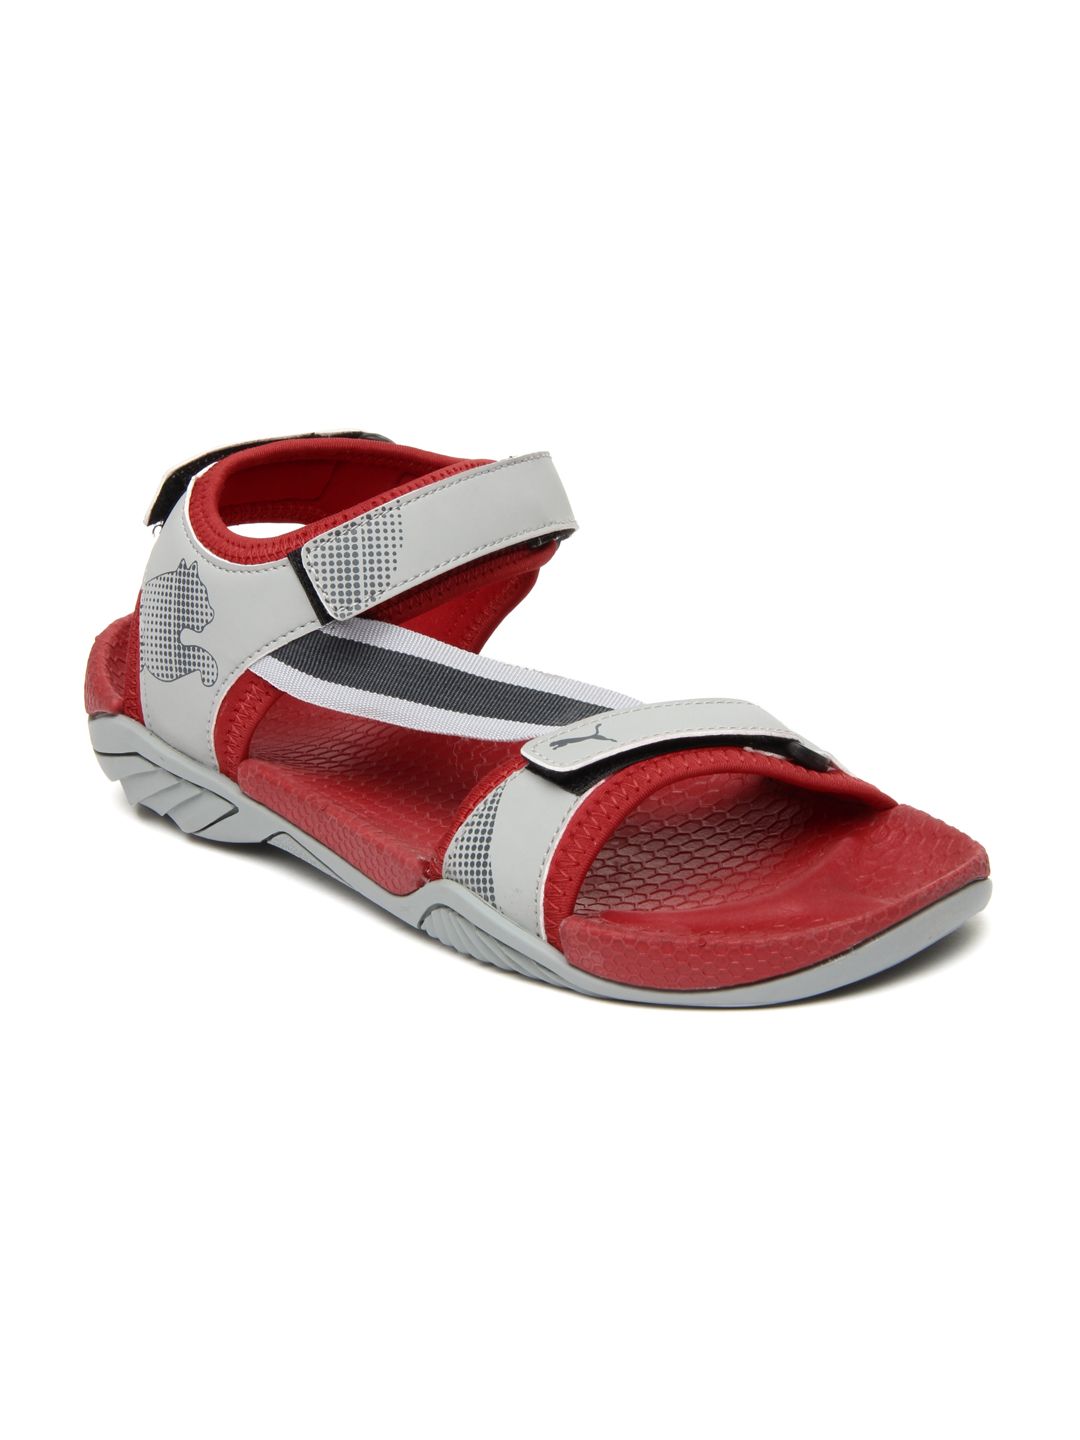 puma k9000 xc sandals myntra - Grandt's 